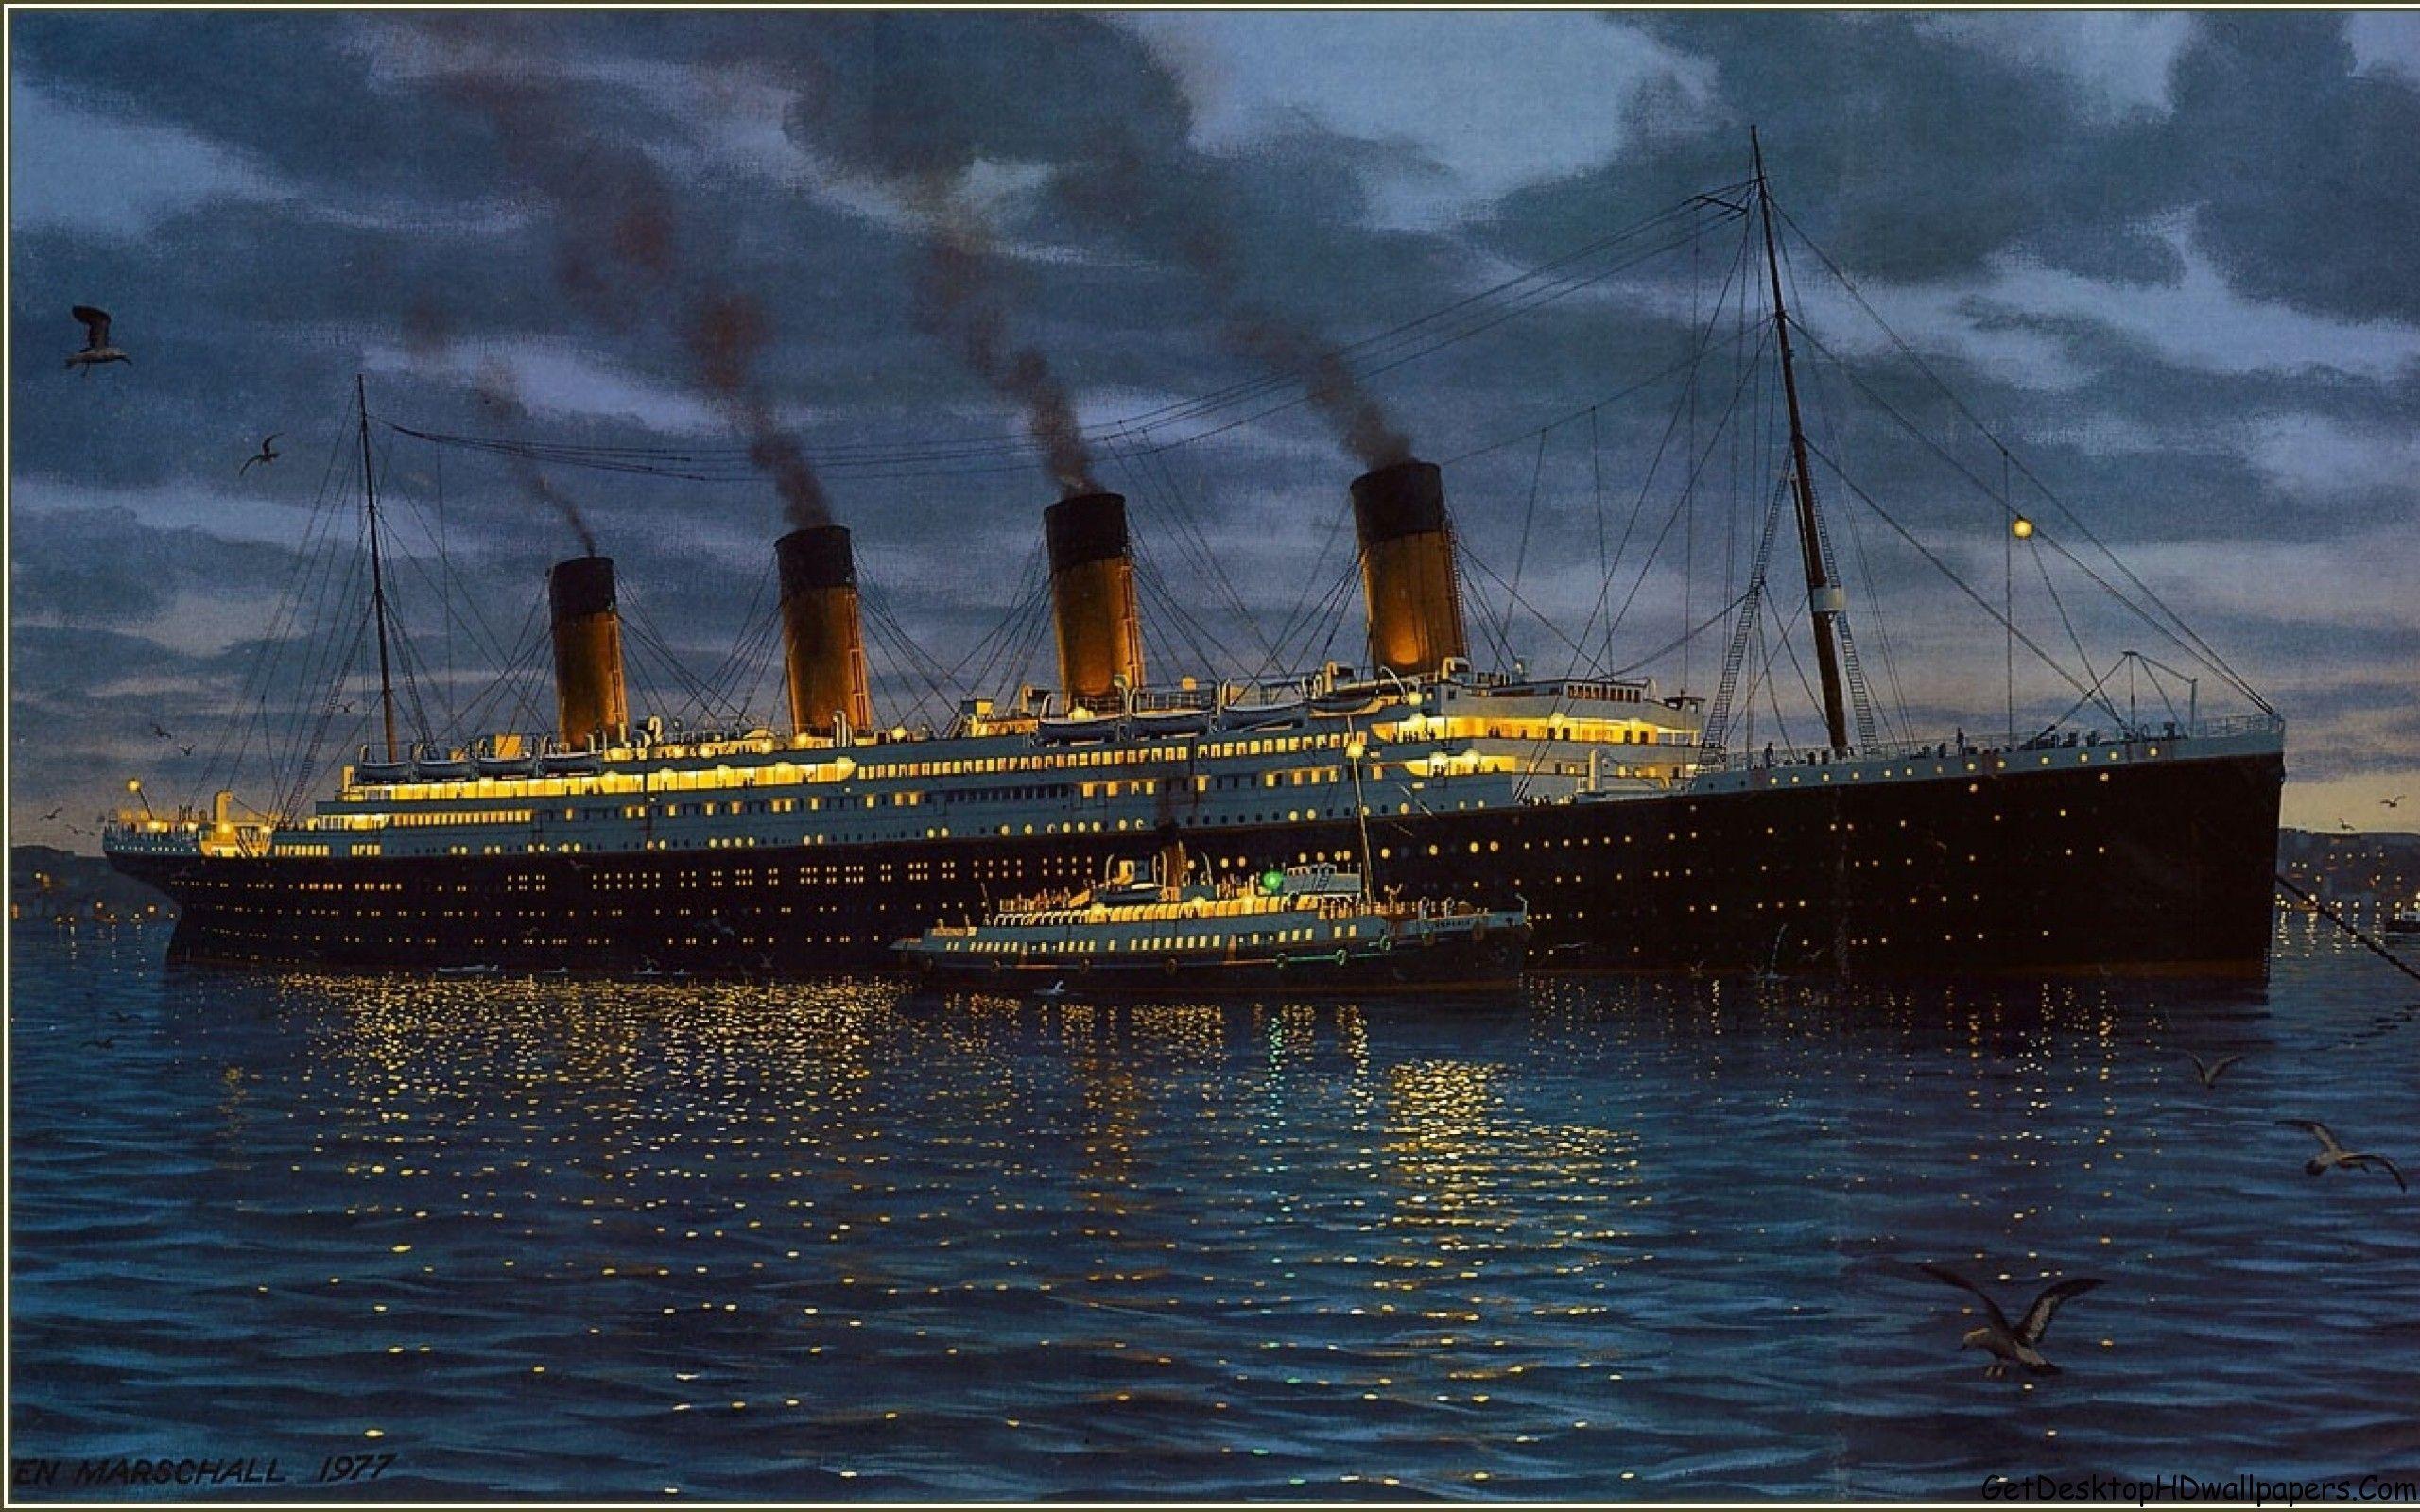 49+] Titanic Wallpapers Free Download - WallpaperSafari